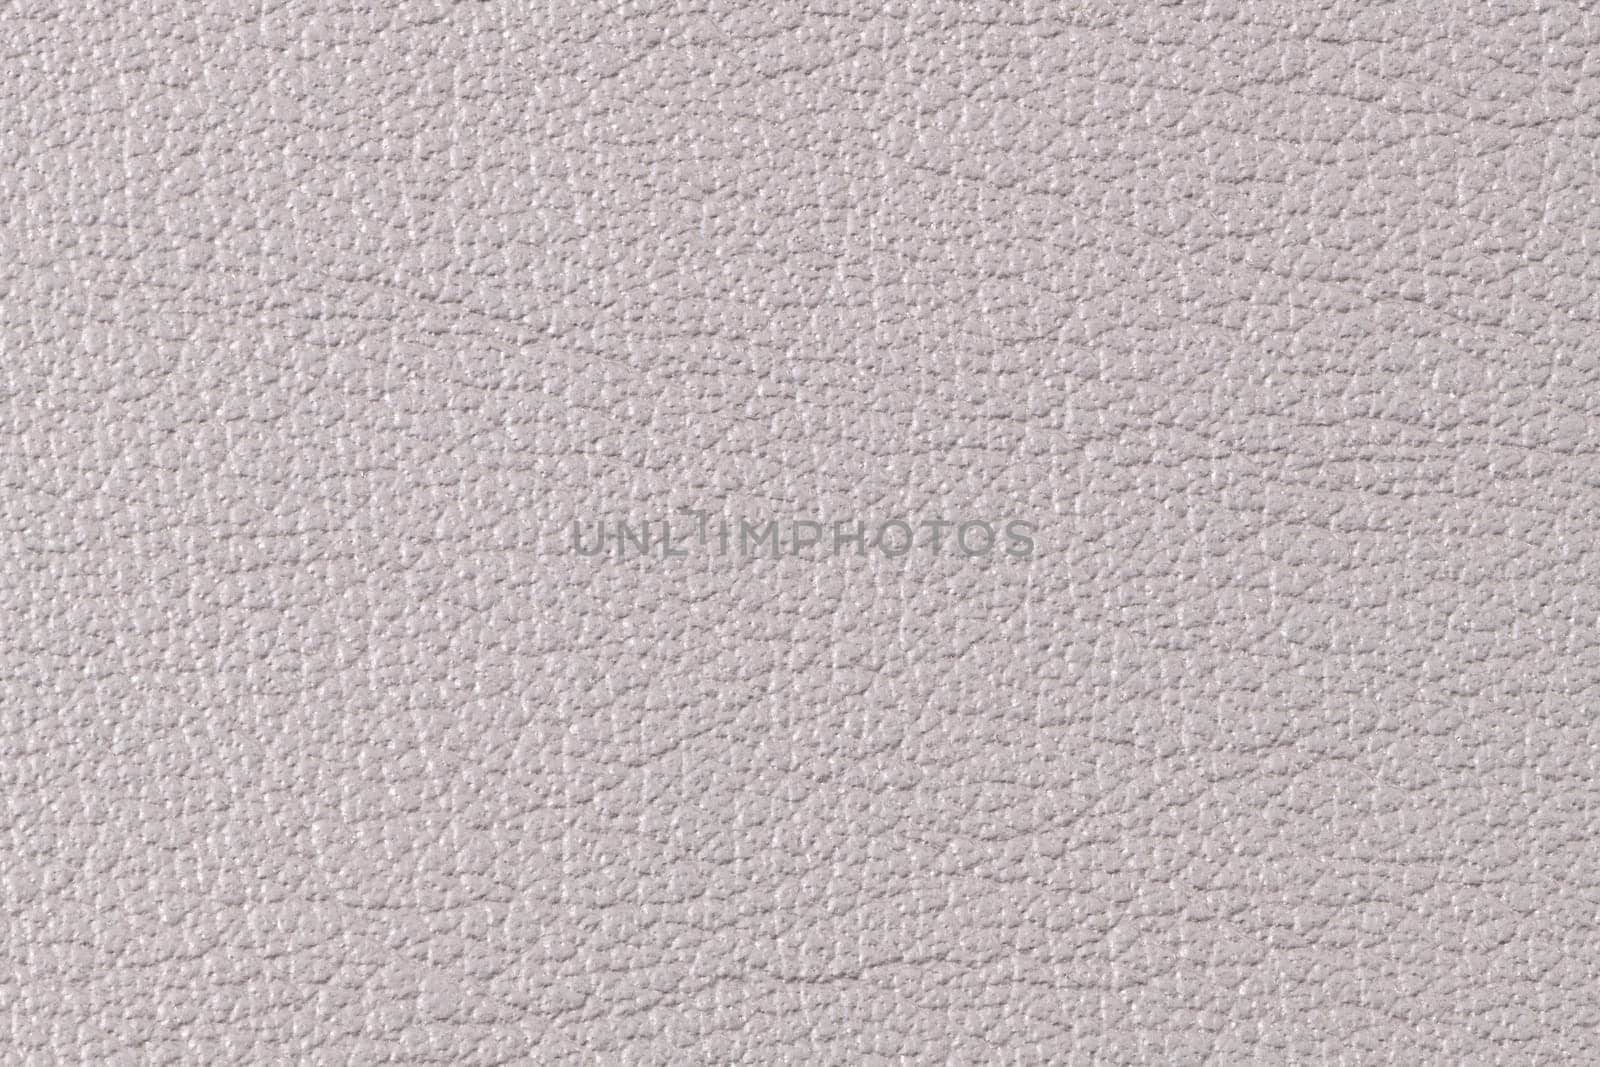 Grey leather texture closeup backgroud.